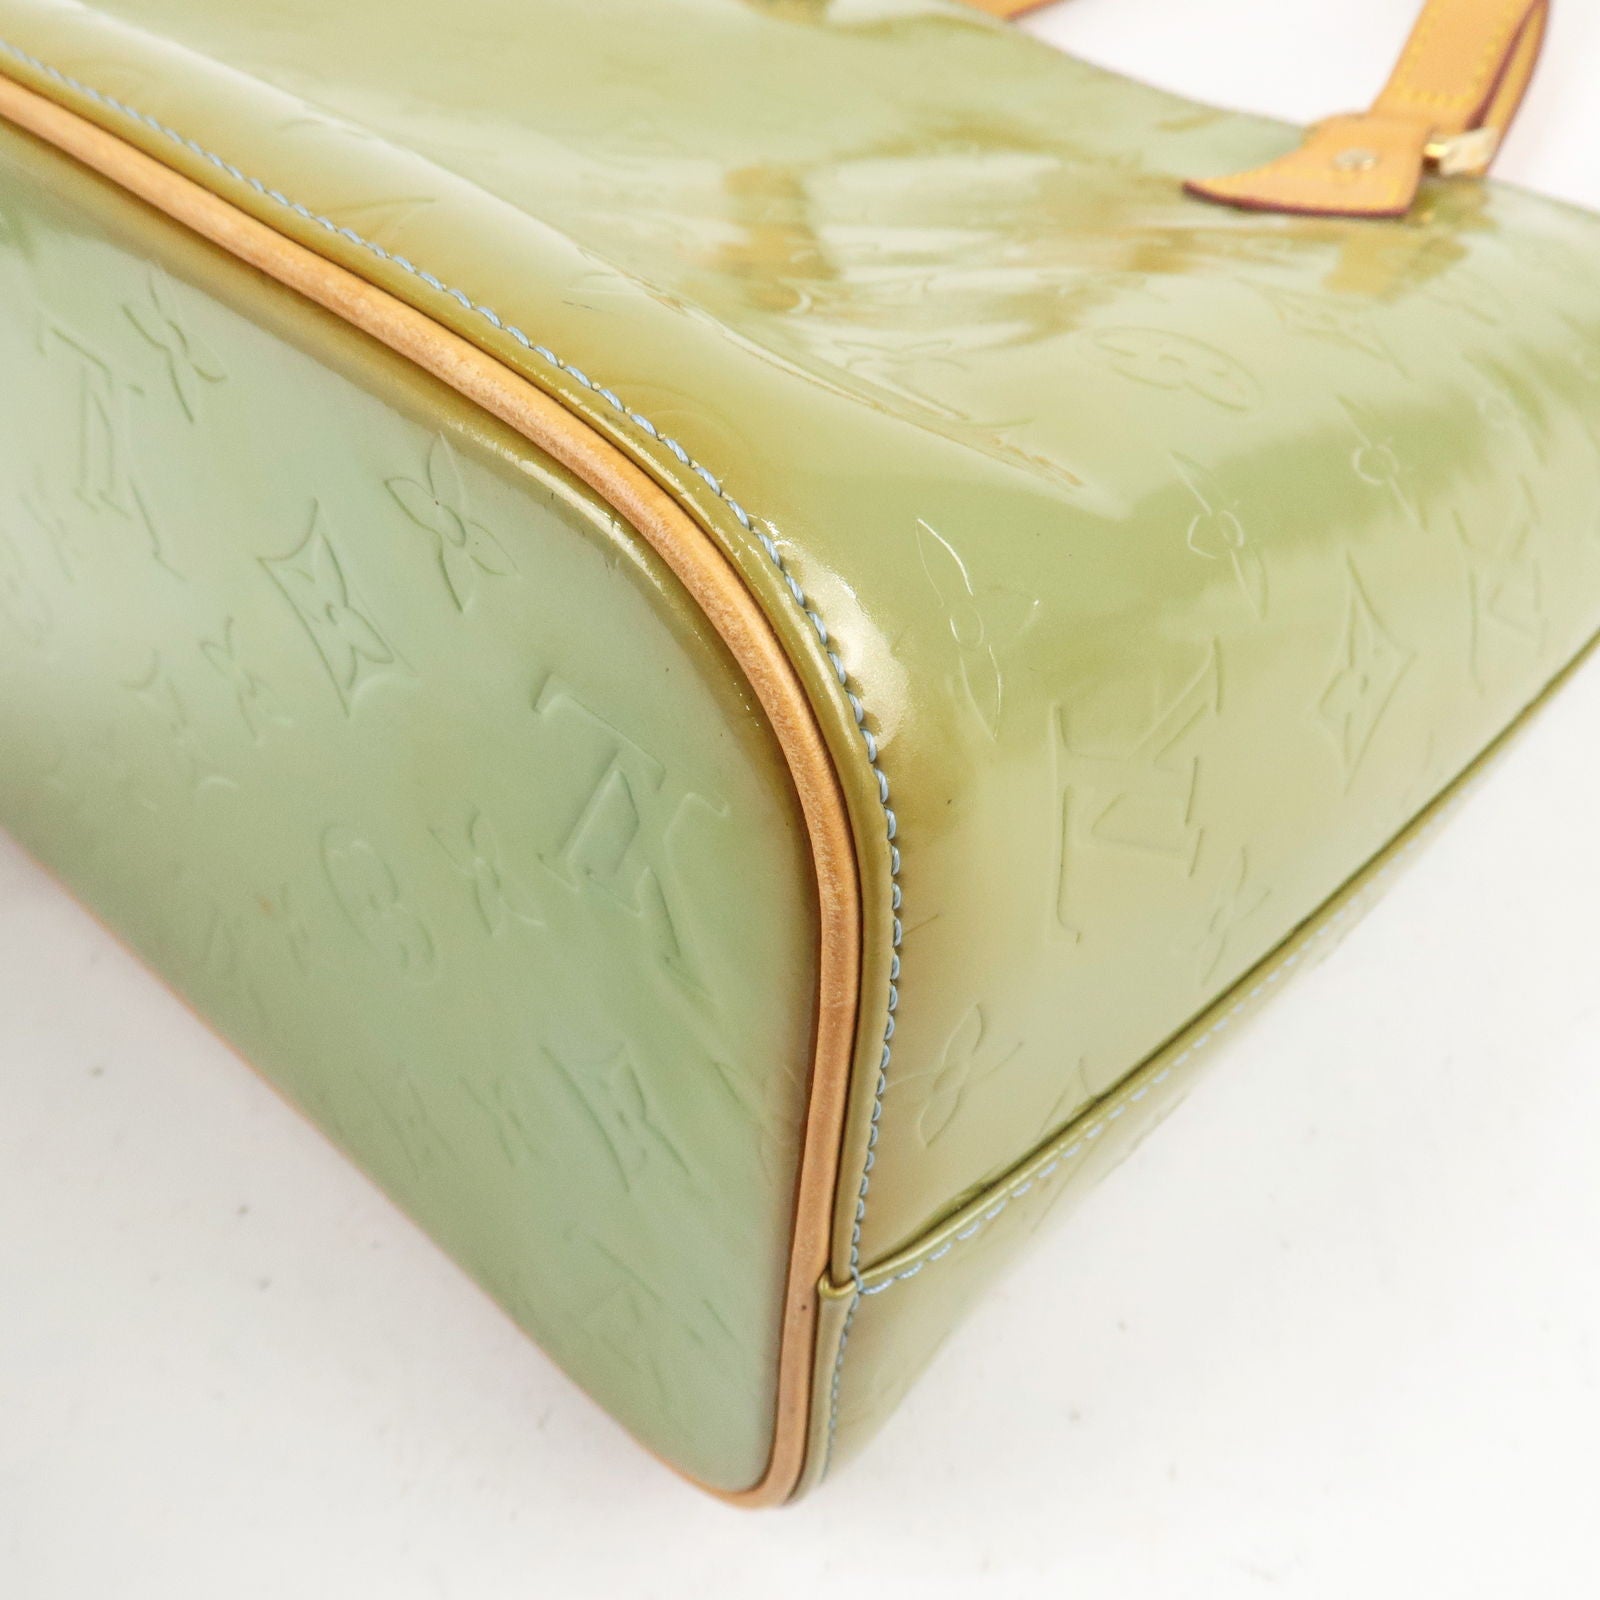 Vintage Louis Vuitton Vernis Houston Tote Bag in Colour Mustard with  Dustbag - Harrington & Co.